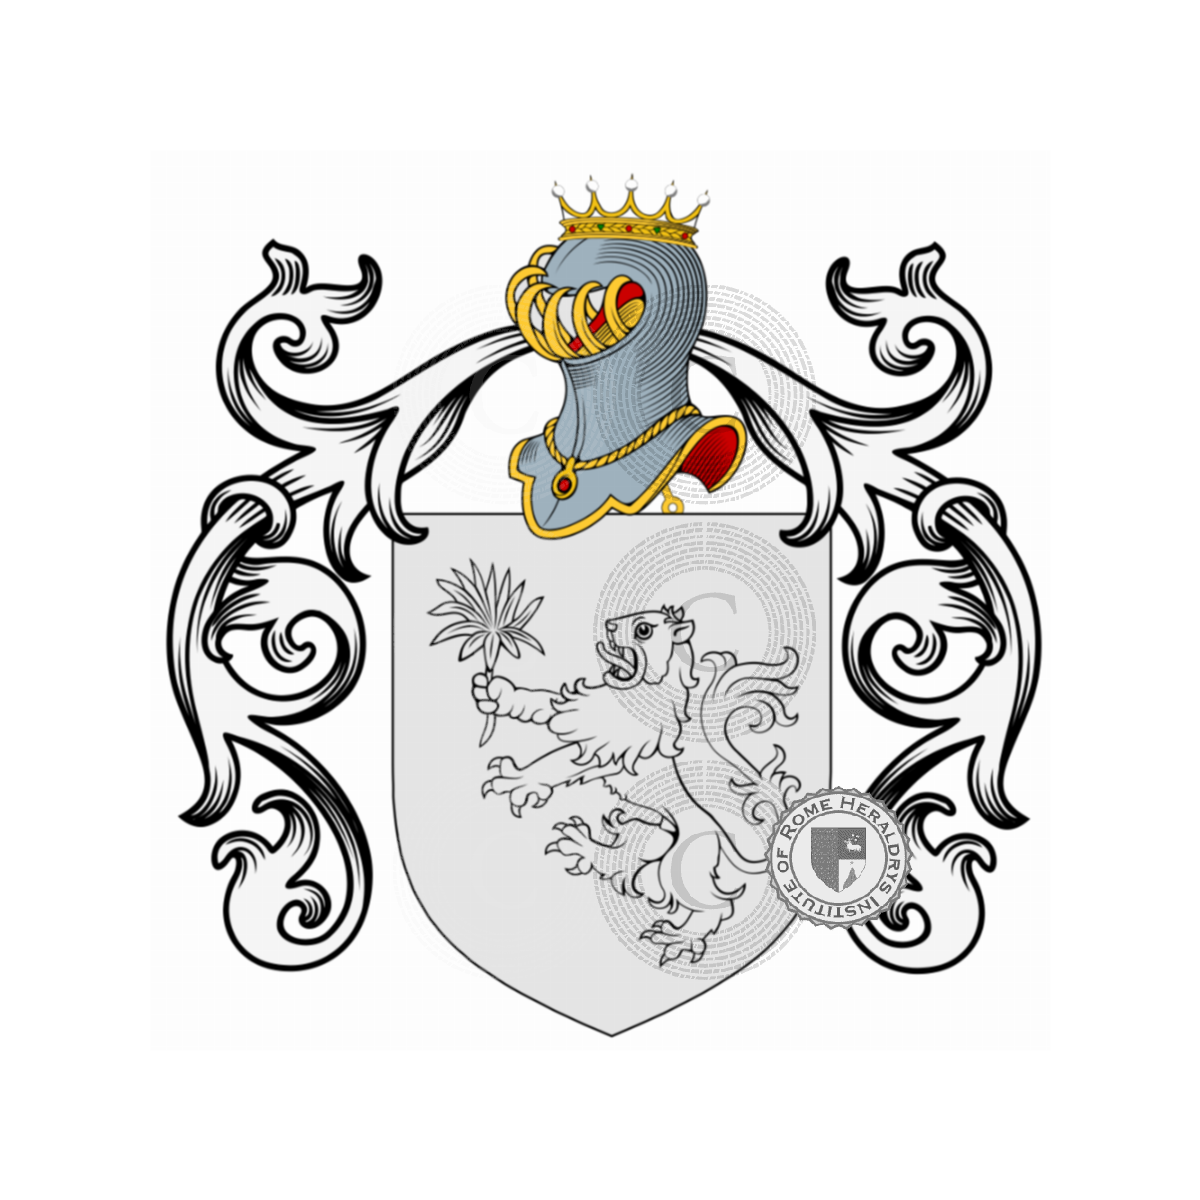 Wappen der FamilieSabbione, dal Sabbione,de Sabbione,Sabbione,Sabloni